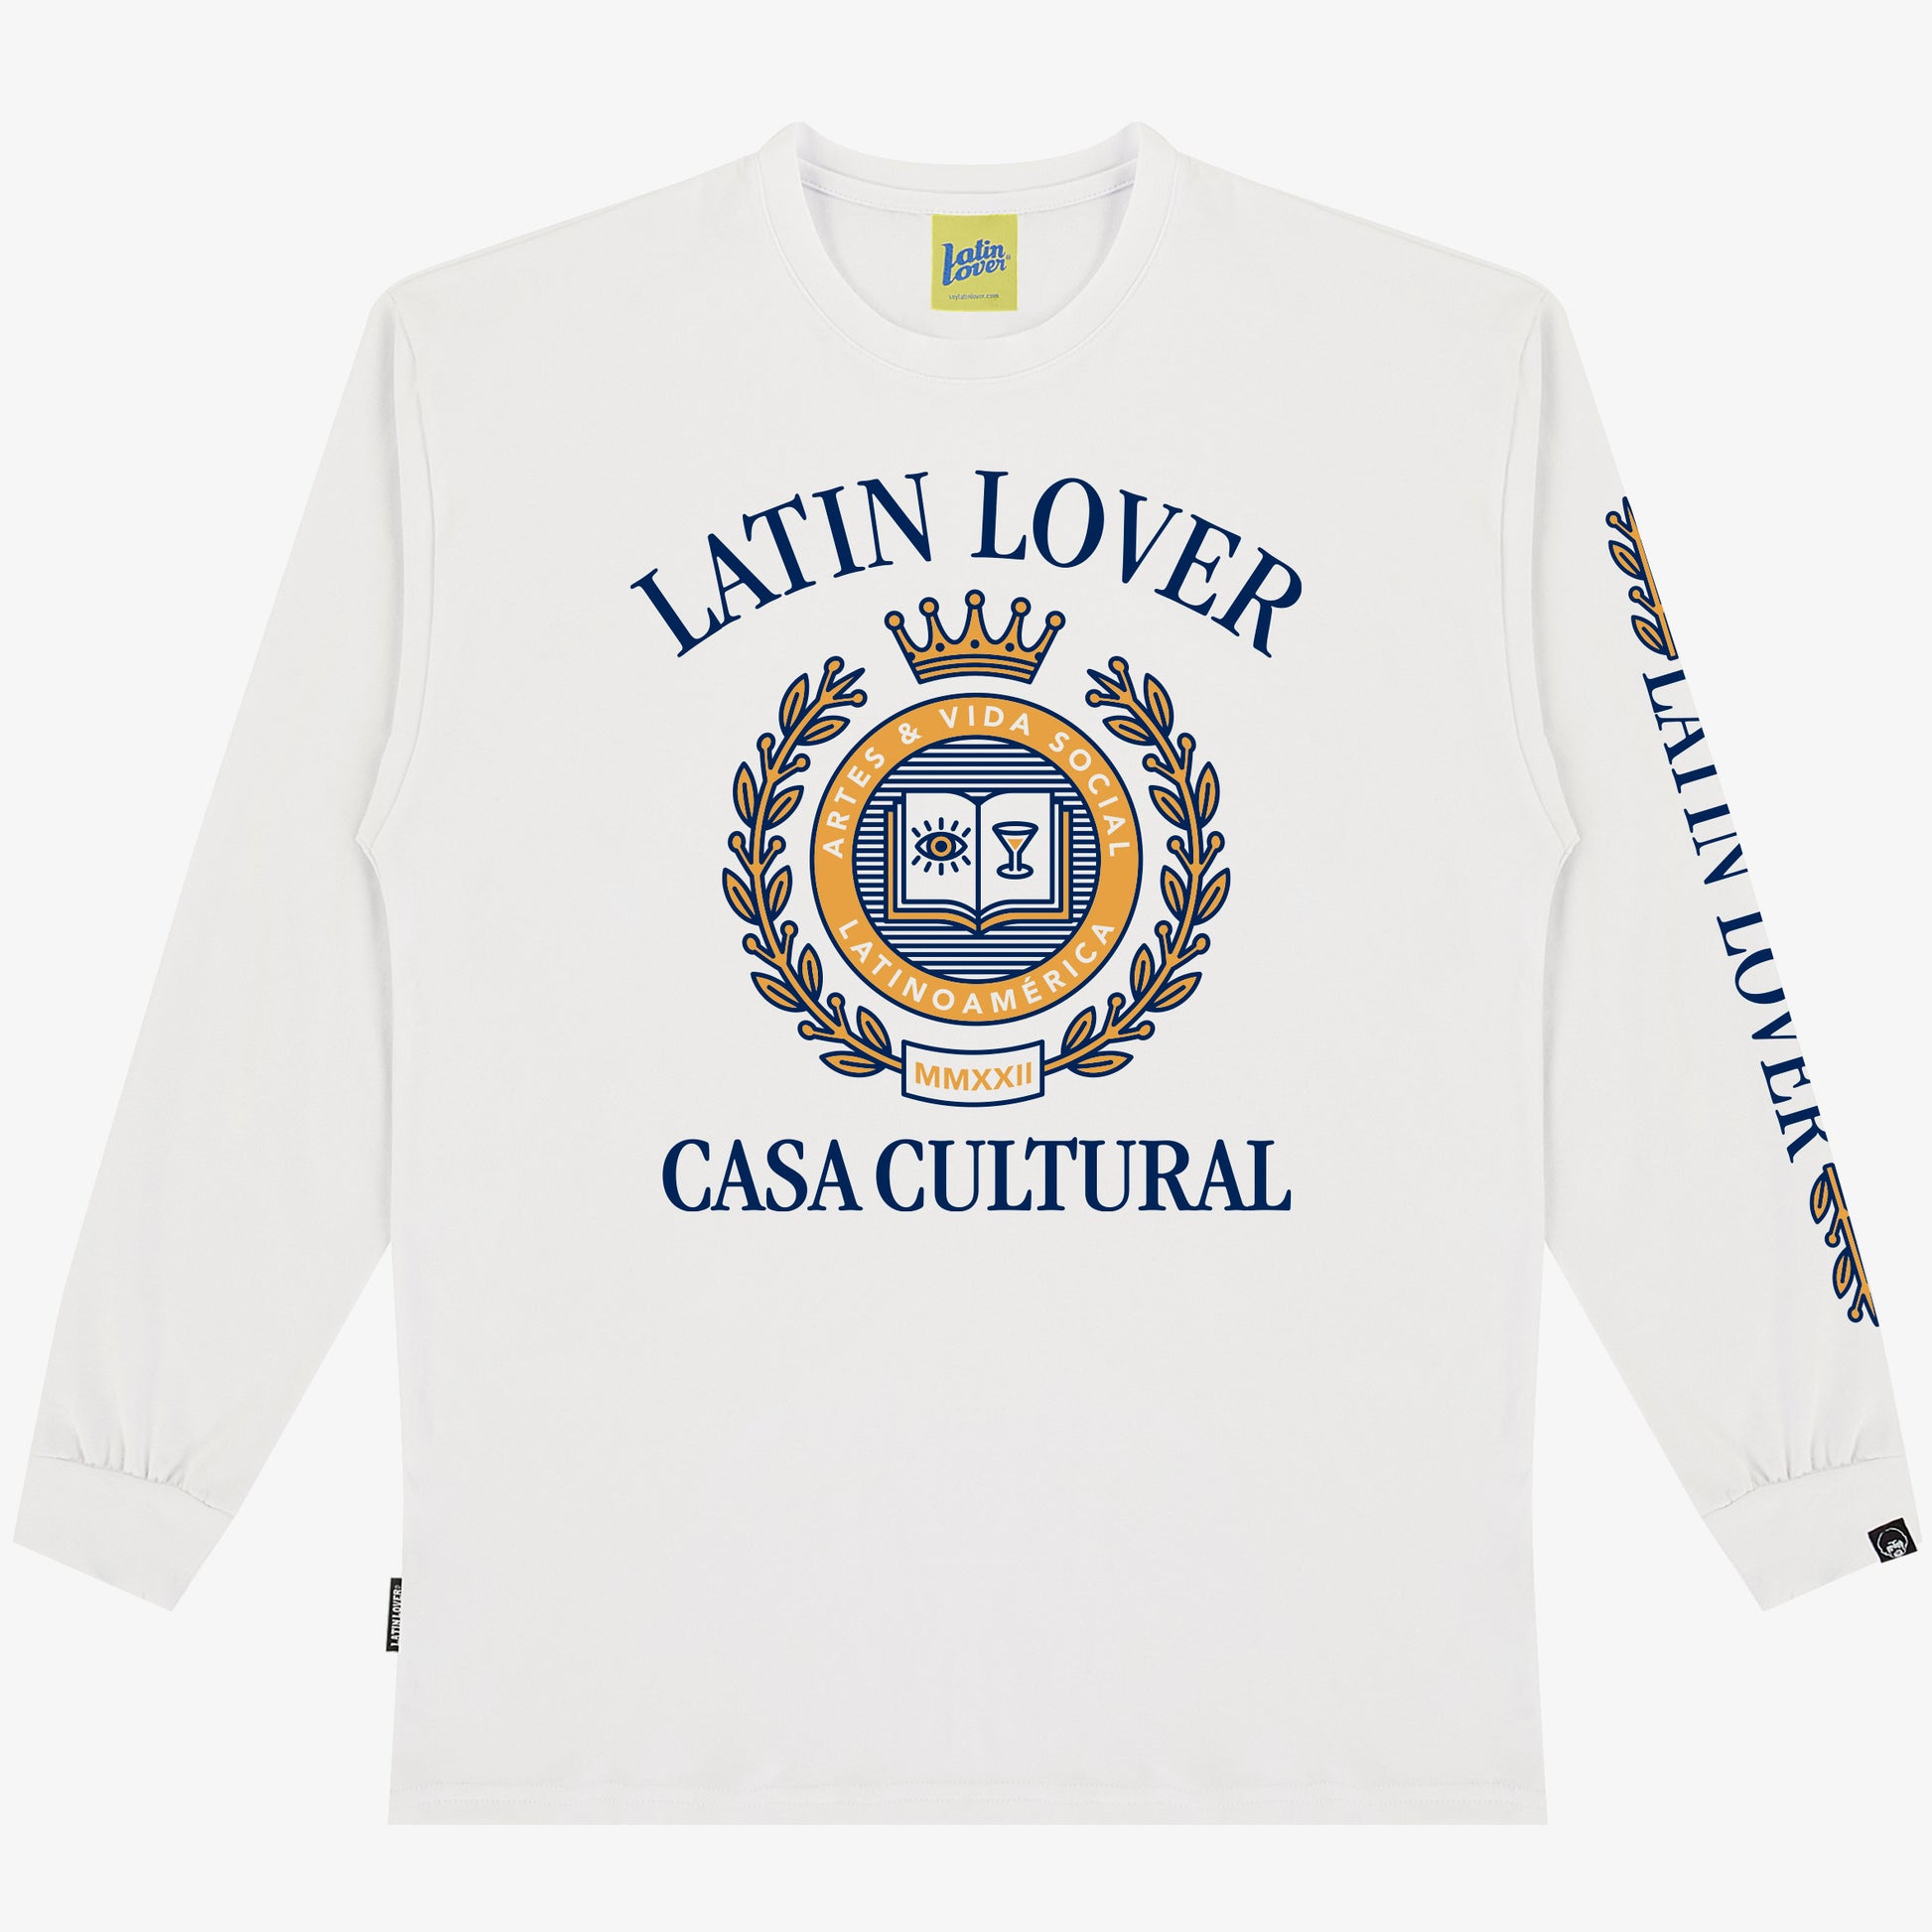 soy-latin-lover-camibuzo-casa-cultural-artes-y-vida-social-off-white.jpg